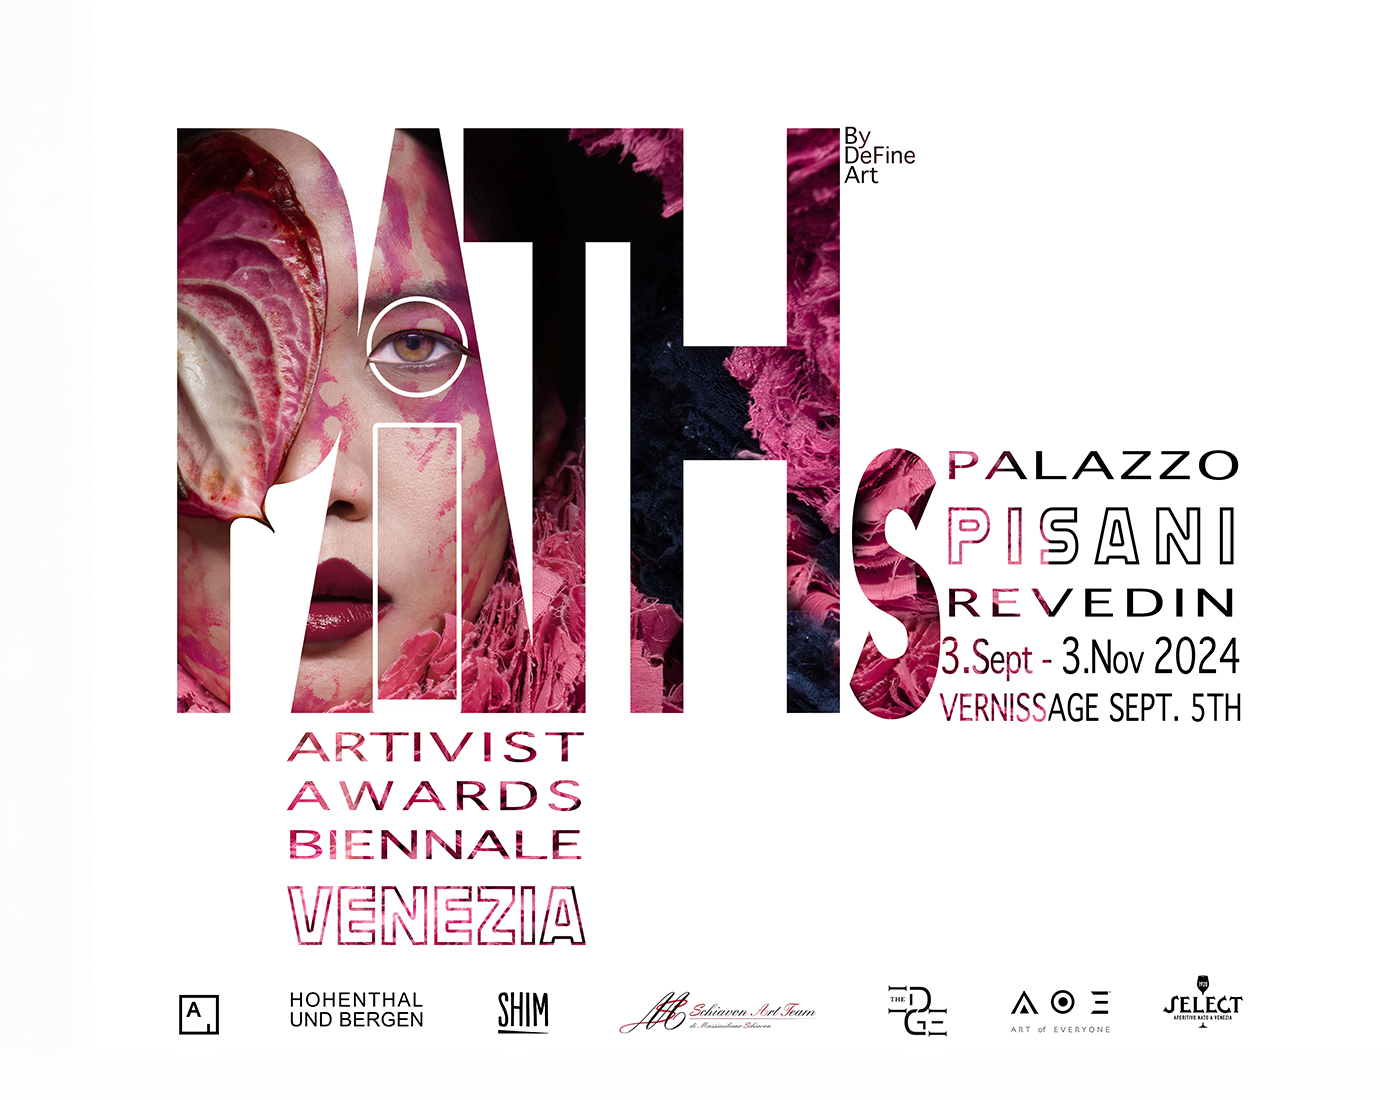 venezia Biennale art show palazzo pisani revedin